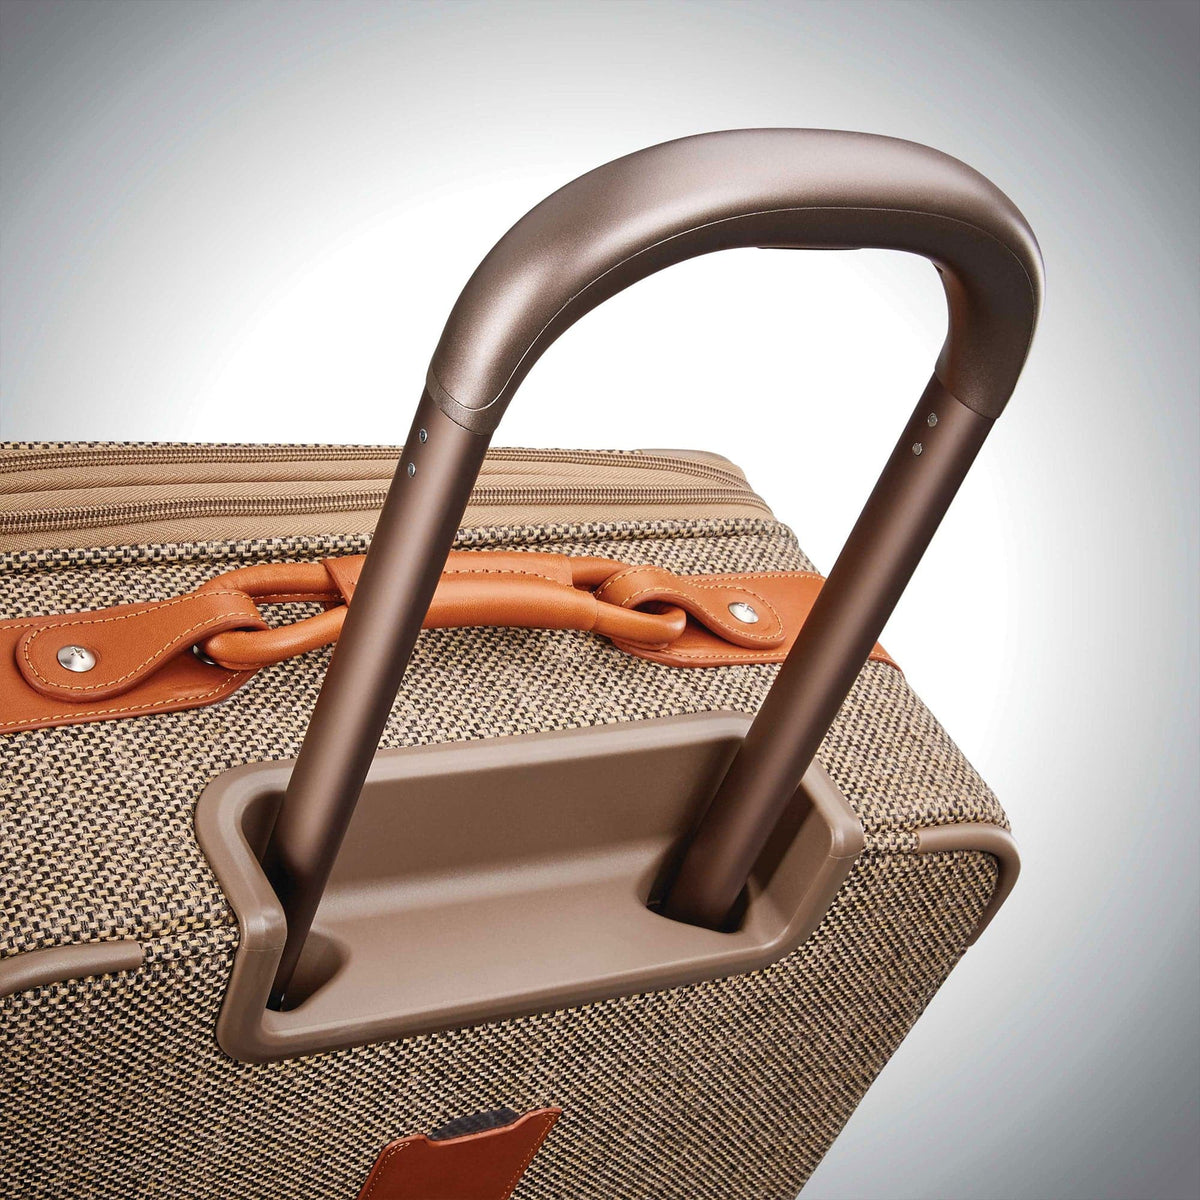 Hartmann Tweed Legend Softside Medium Journey Expandable Spinner Luggage